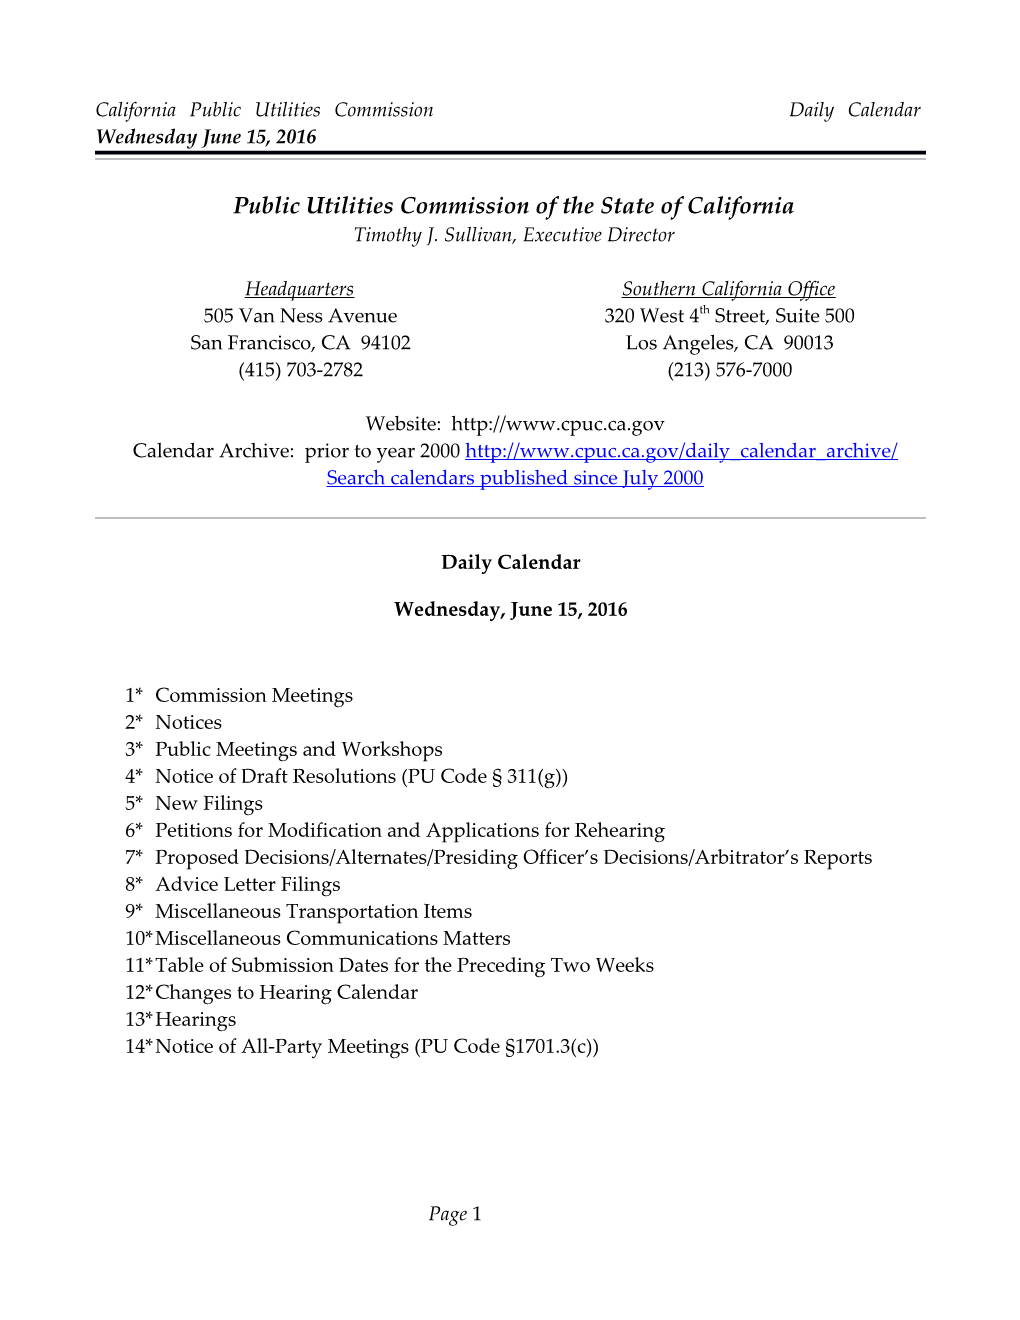 California Public Utilities Commission Daily Calendar Wednesday June 15, 2016